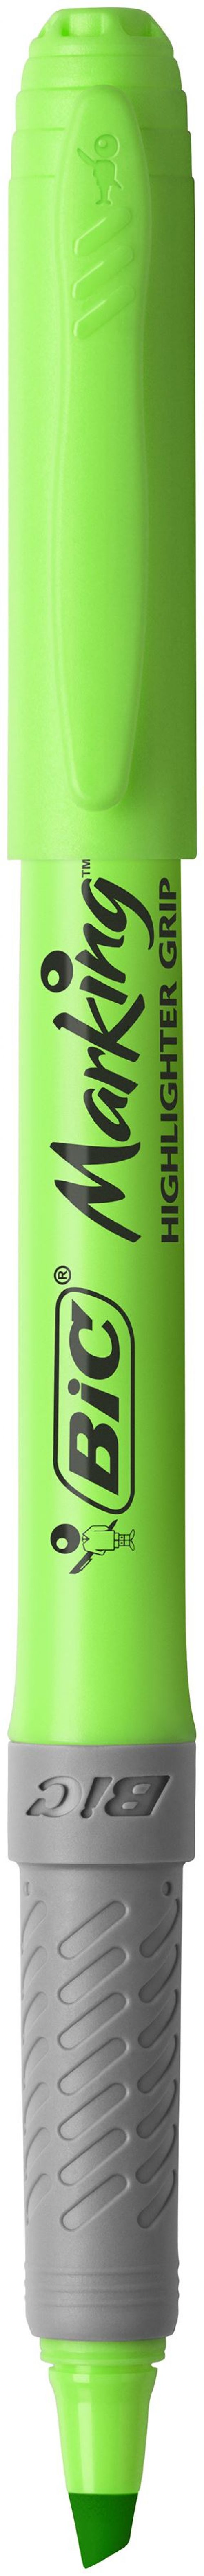 BIC Highlighter Grip Green (Box of 12) 811932